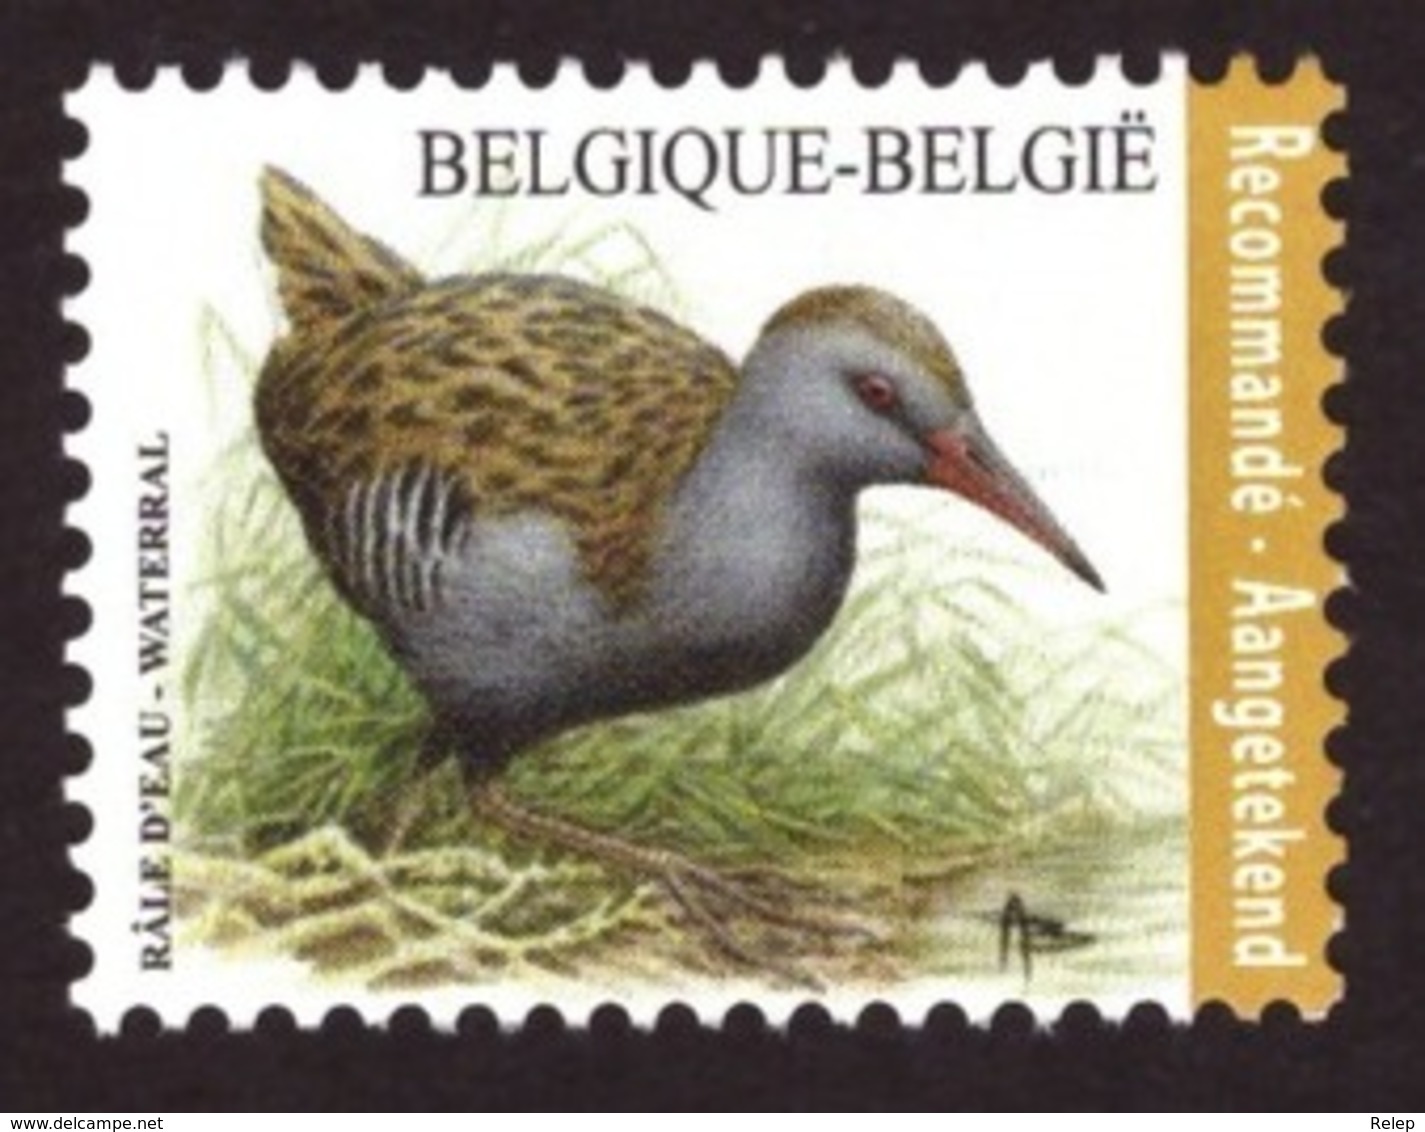 Belgique 2017 - YT N° 4641 Birds - Rallus Aquaticus - MNH - Cote €8.00 Registrered Letter Stamp - Nuevos